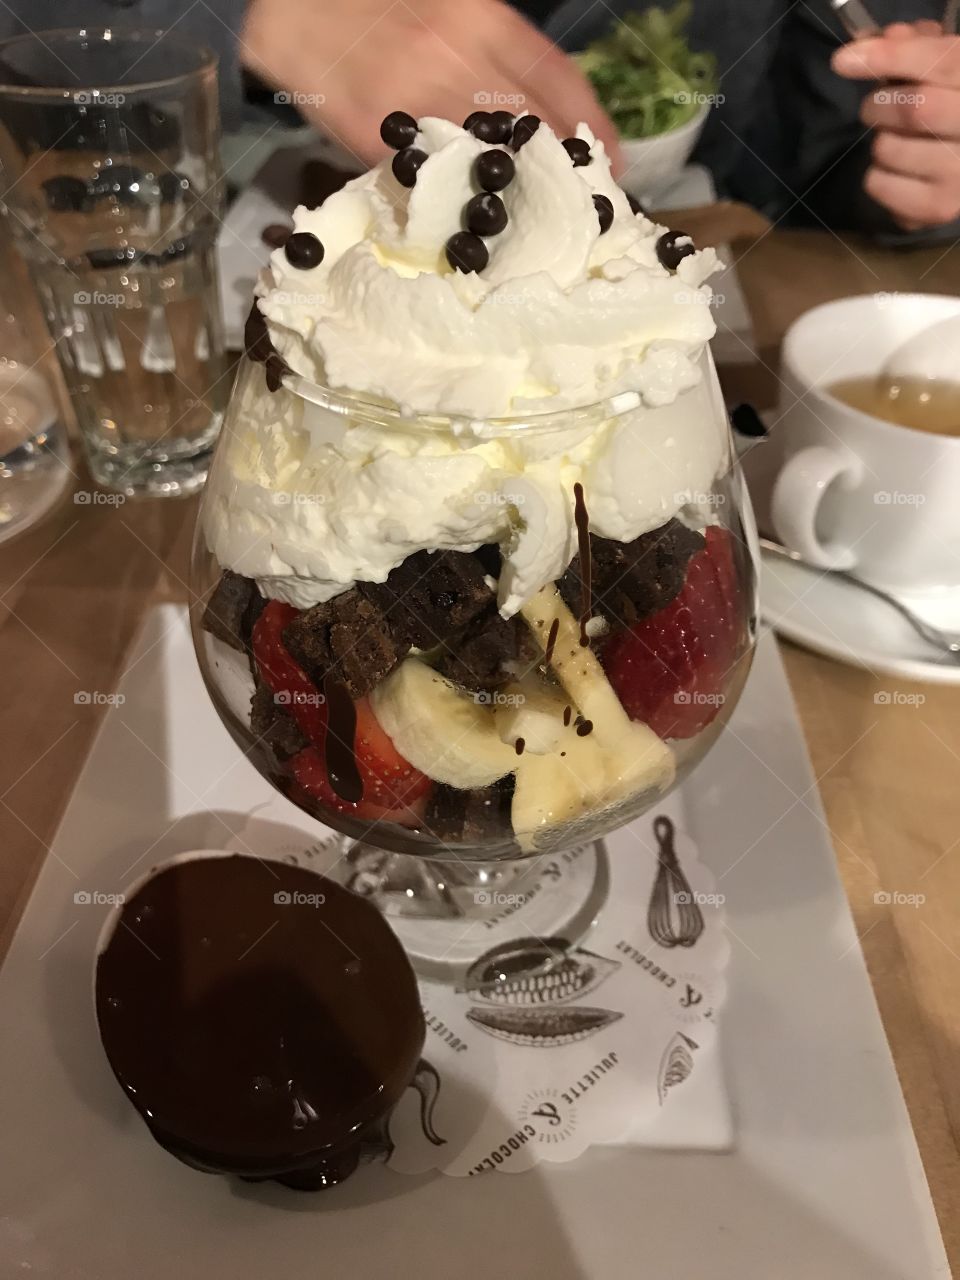 Chocolate Sundae with fruit and whipped cream